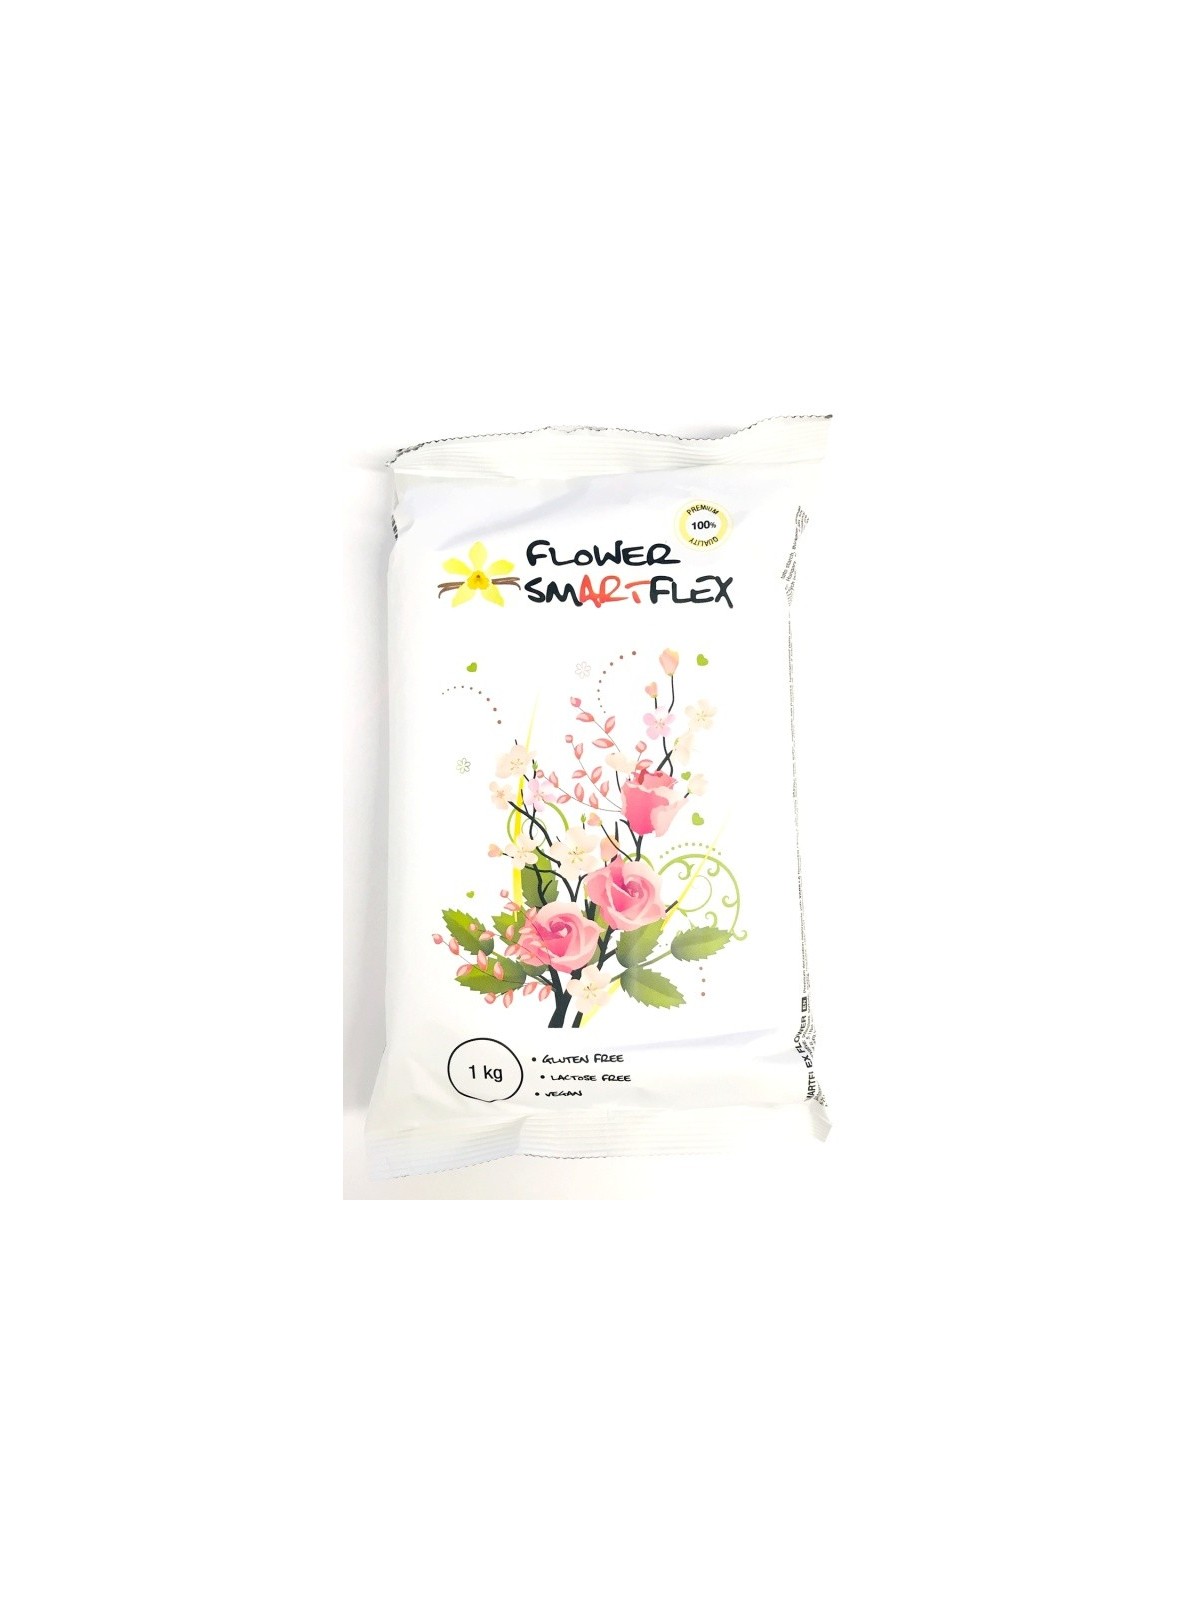 Smartflex Flower Vanilla 1kg - Modeliert Fondant